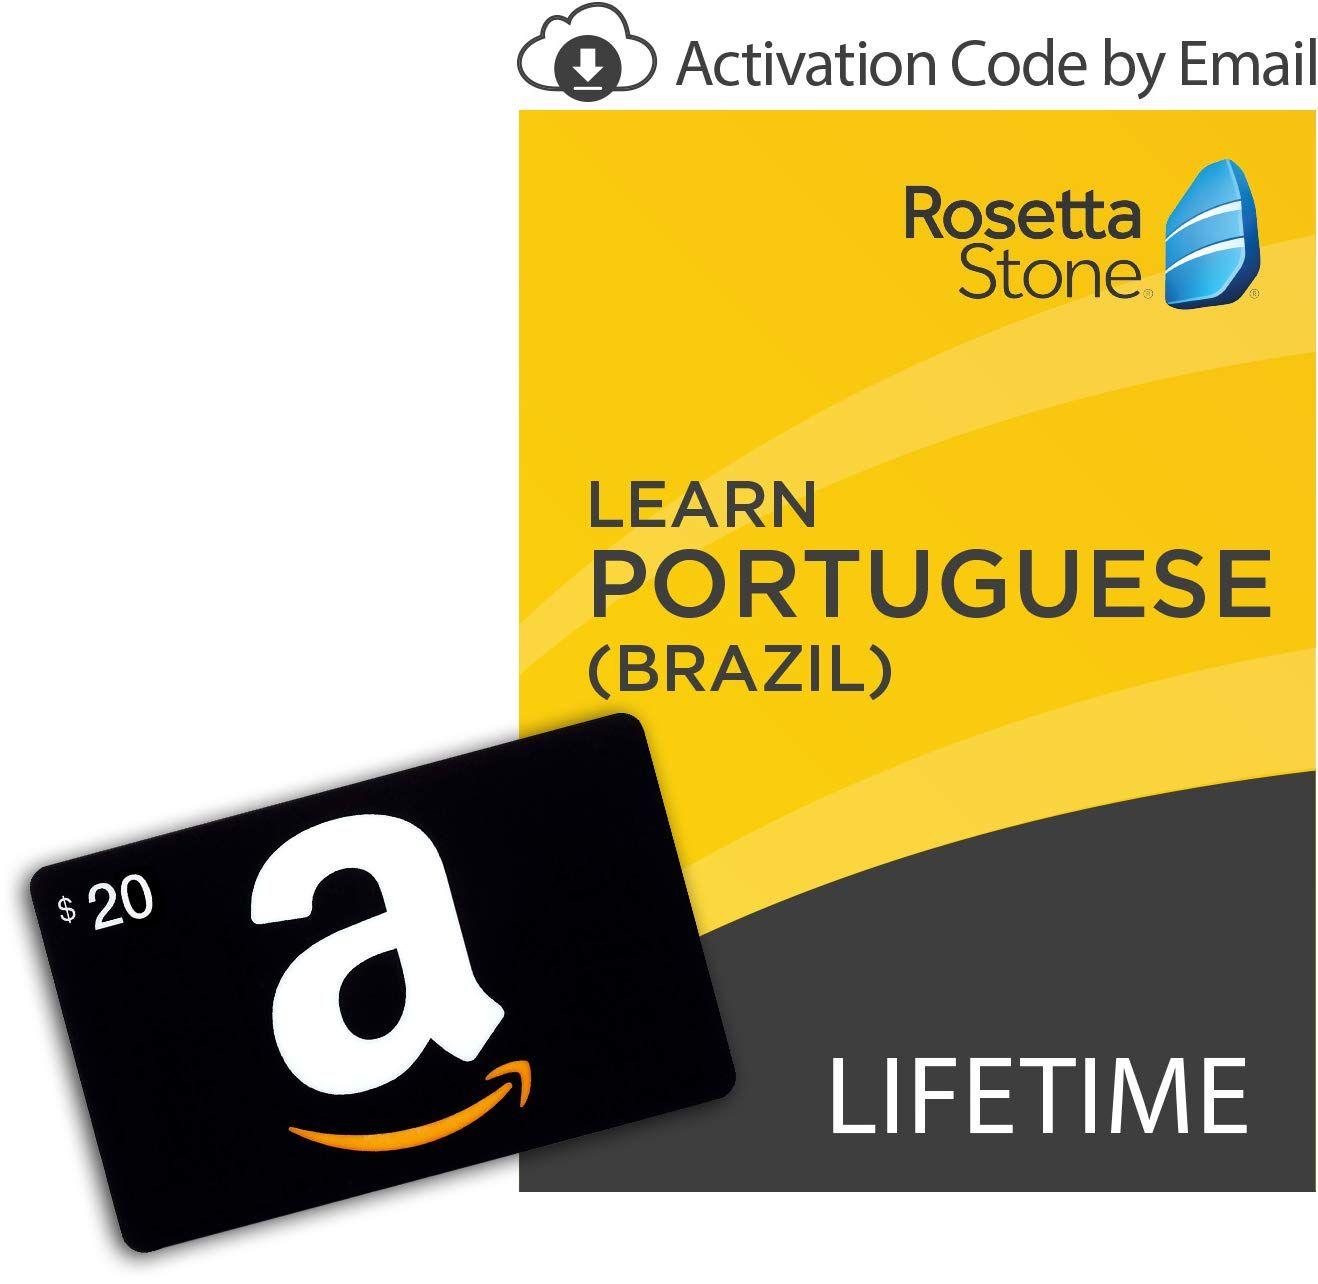 Rosetta Stone Logo - Amazon.com: Rosetta Stone: Learn Portuguese (Brazil) [Lifetime ...